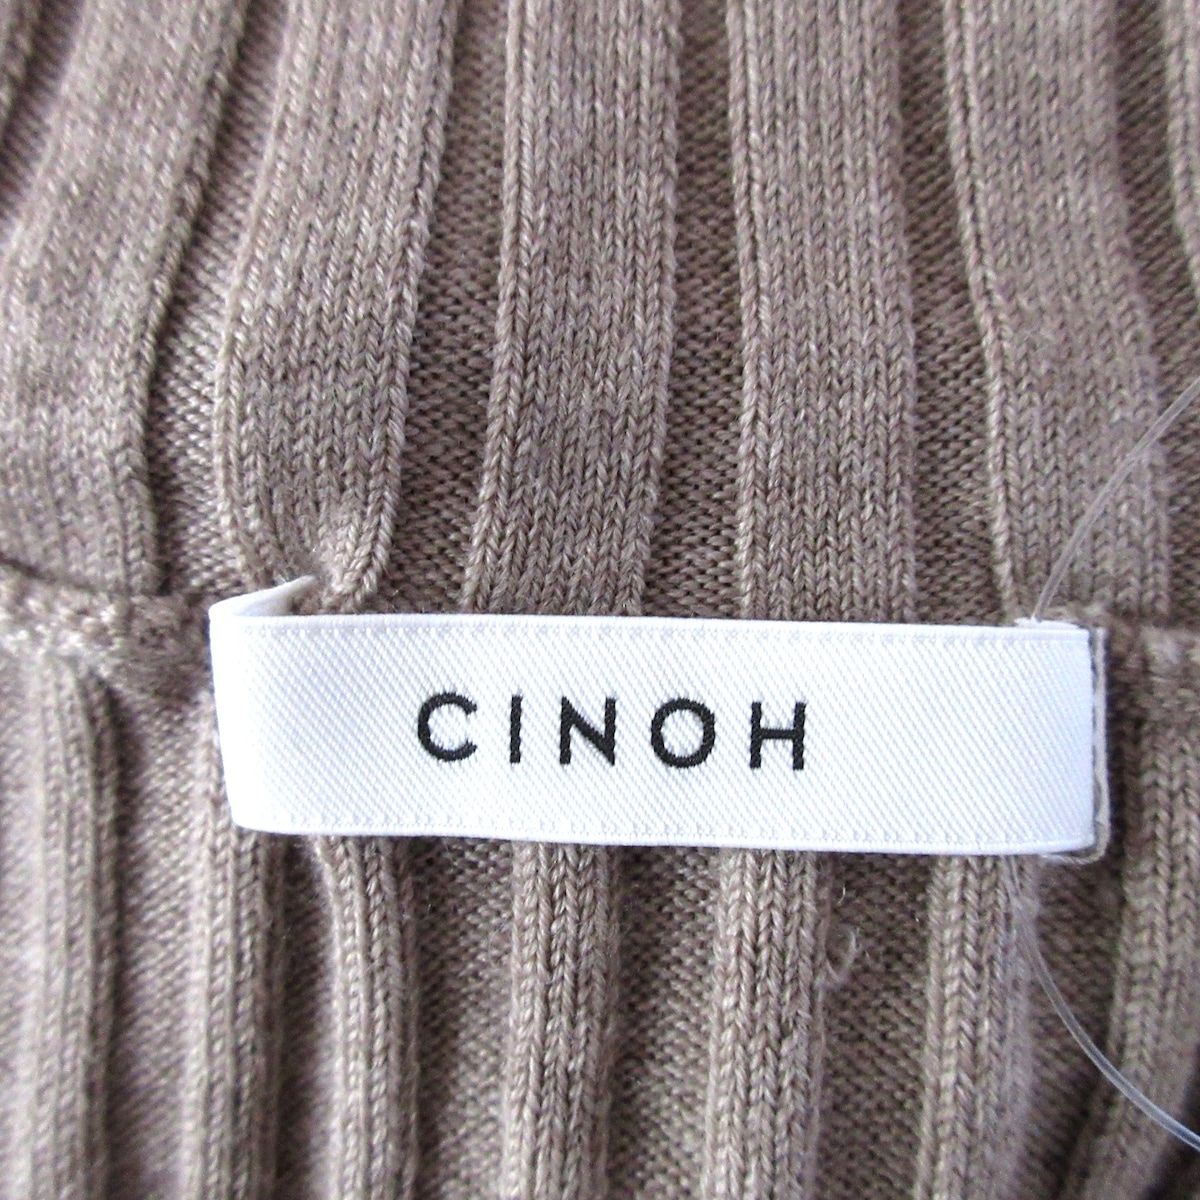 CINOH(チノ) 長袖セーター サイズ36 S レディース - ブラウン×イエロー タートルネック